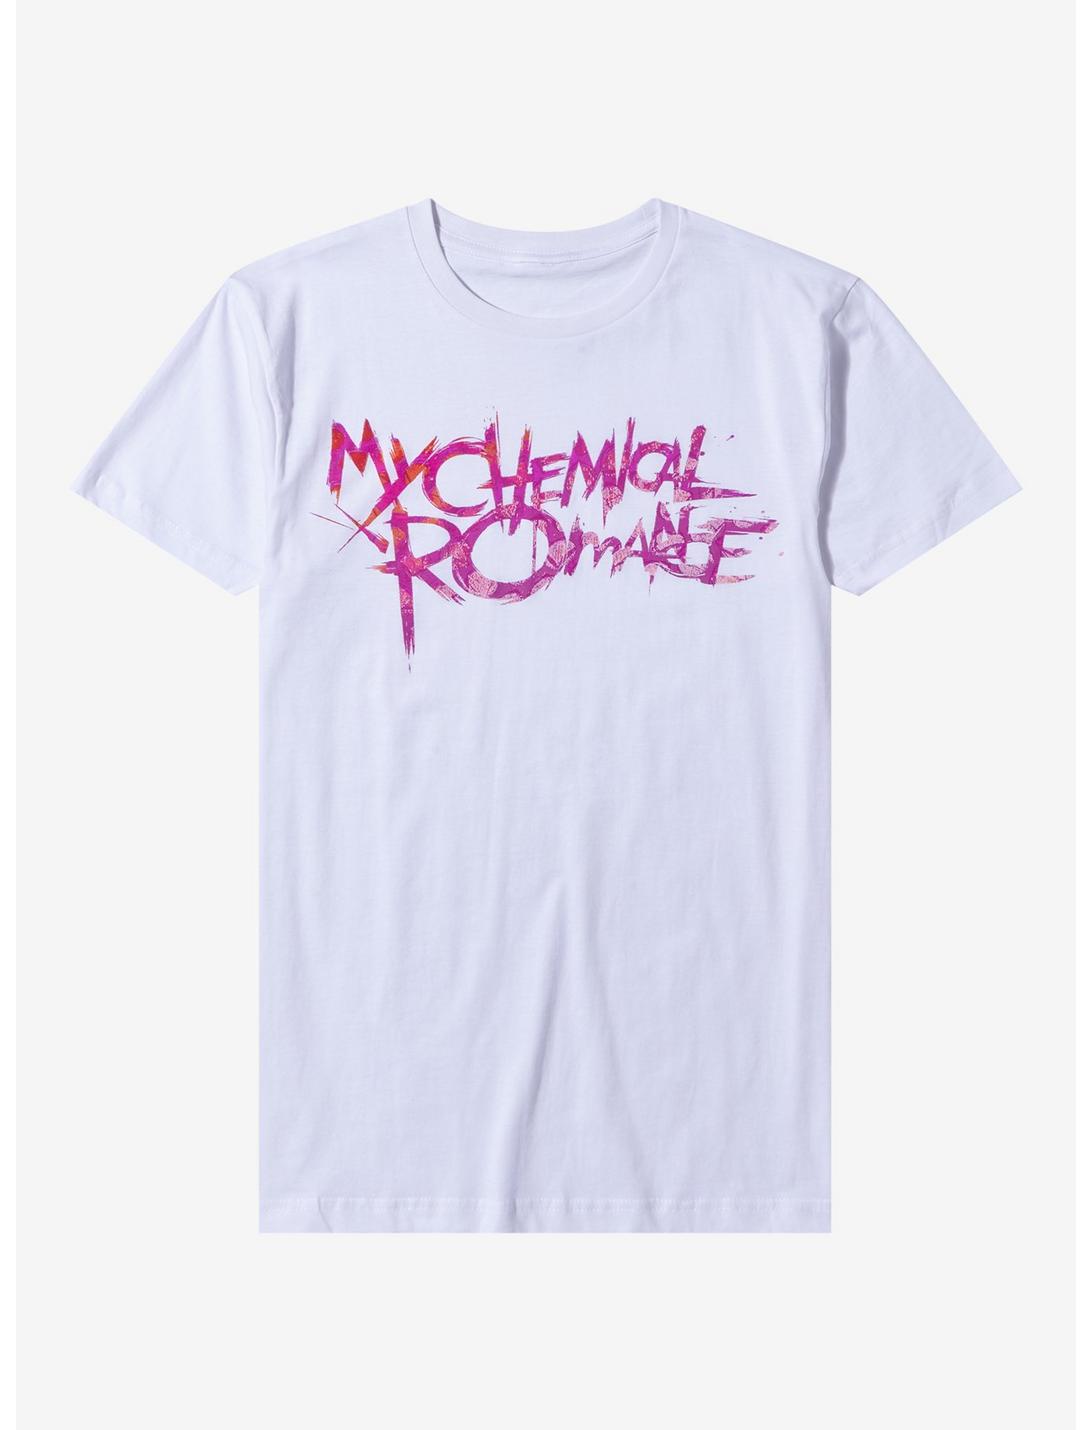 My Chemical Romance Pink Logo Boyfriend Fit Girls T-Shirt, BRIGHT WHITE, hi-res